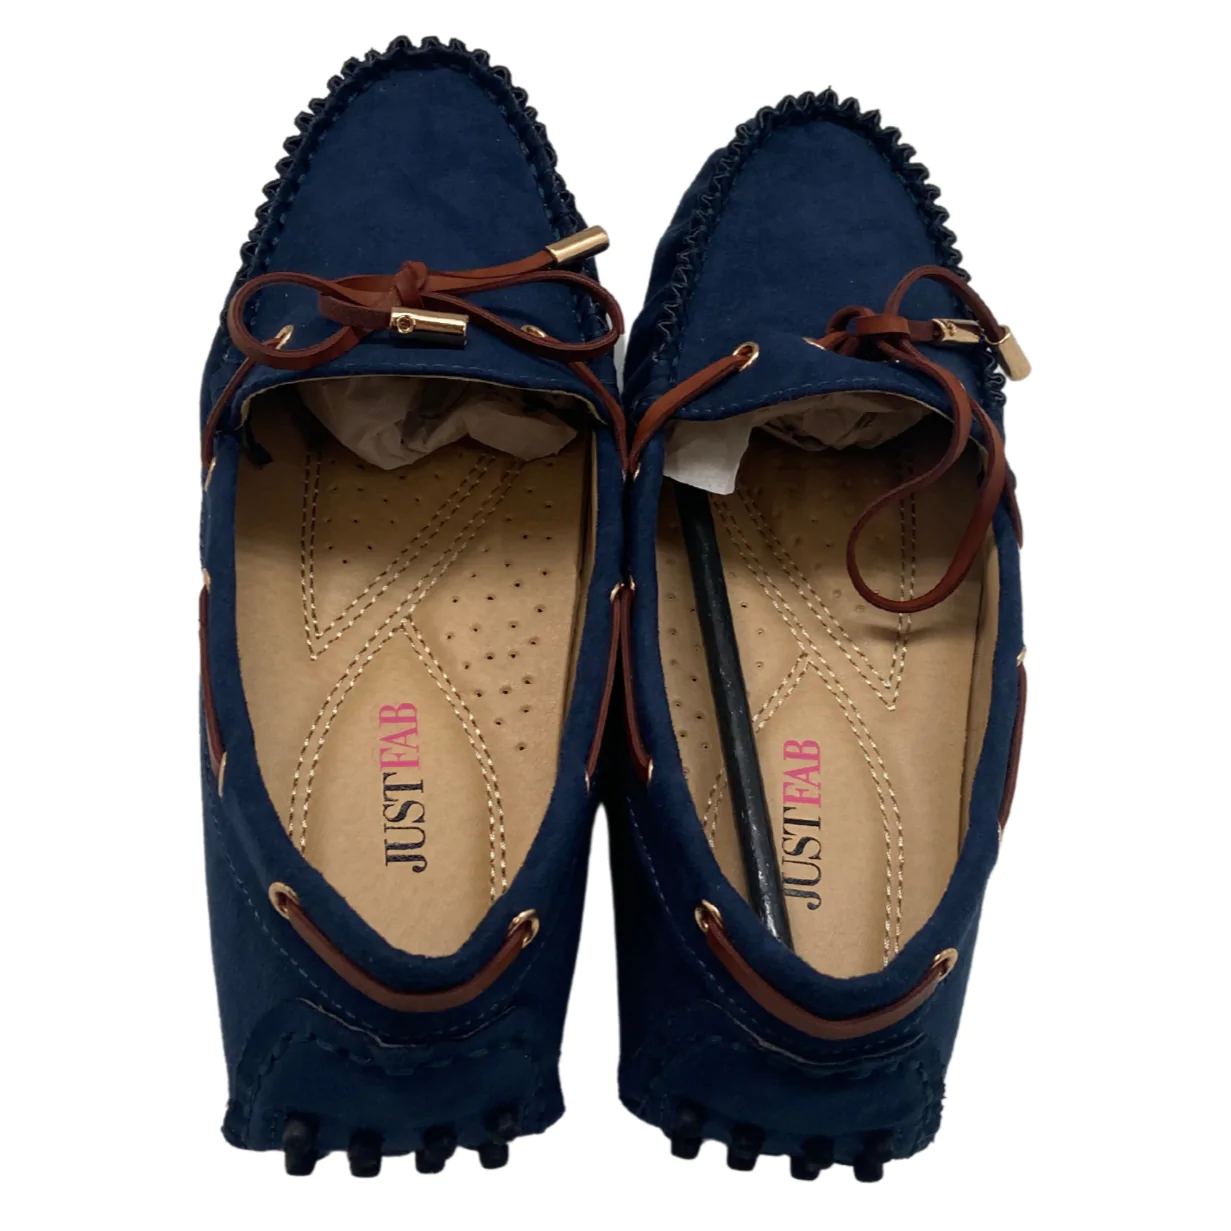 Justfab: Women's Shoe / Moccasin / Navy / Rosalinda / Size 6